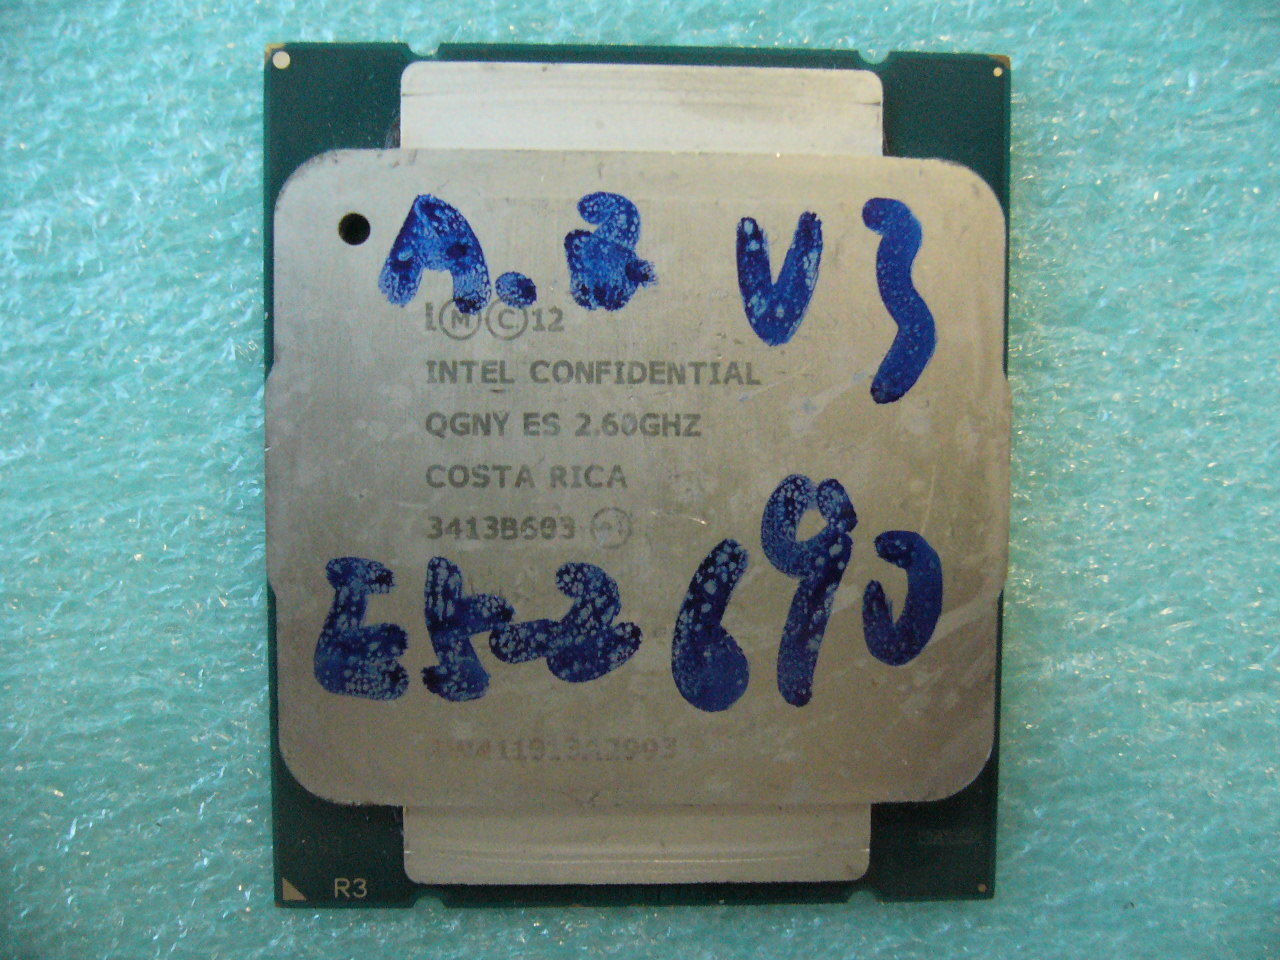 QTY 1x Intel Confidential CPU E5-2690 V3 12-Cores 2.6Ghz LGA2011-3 QGNY PLS READ - Click Image to Close